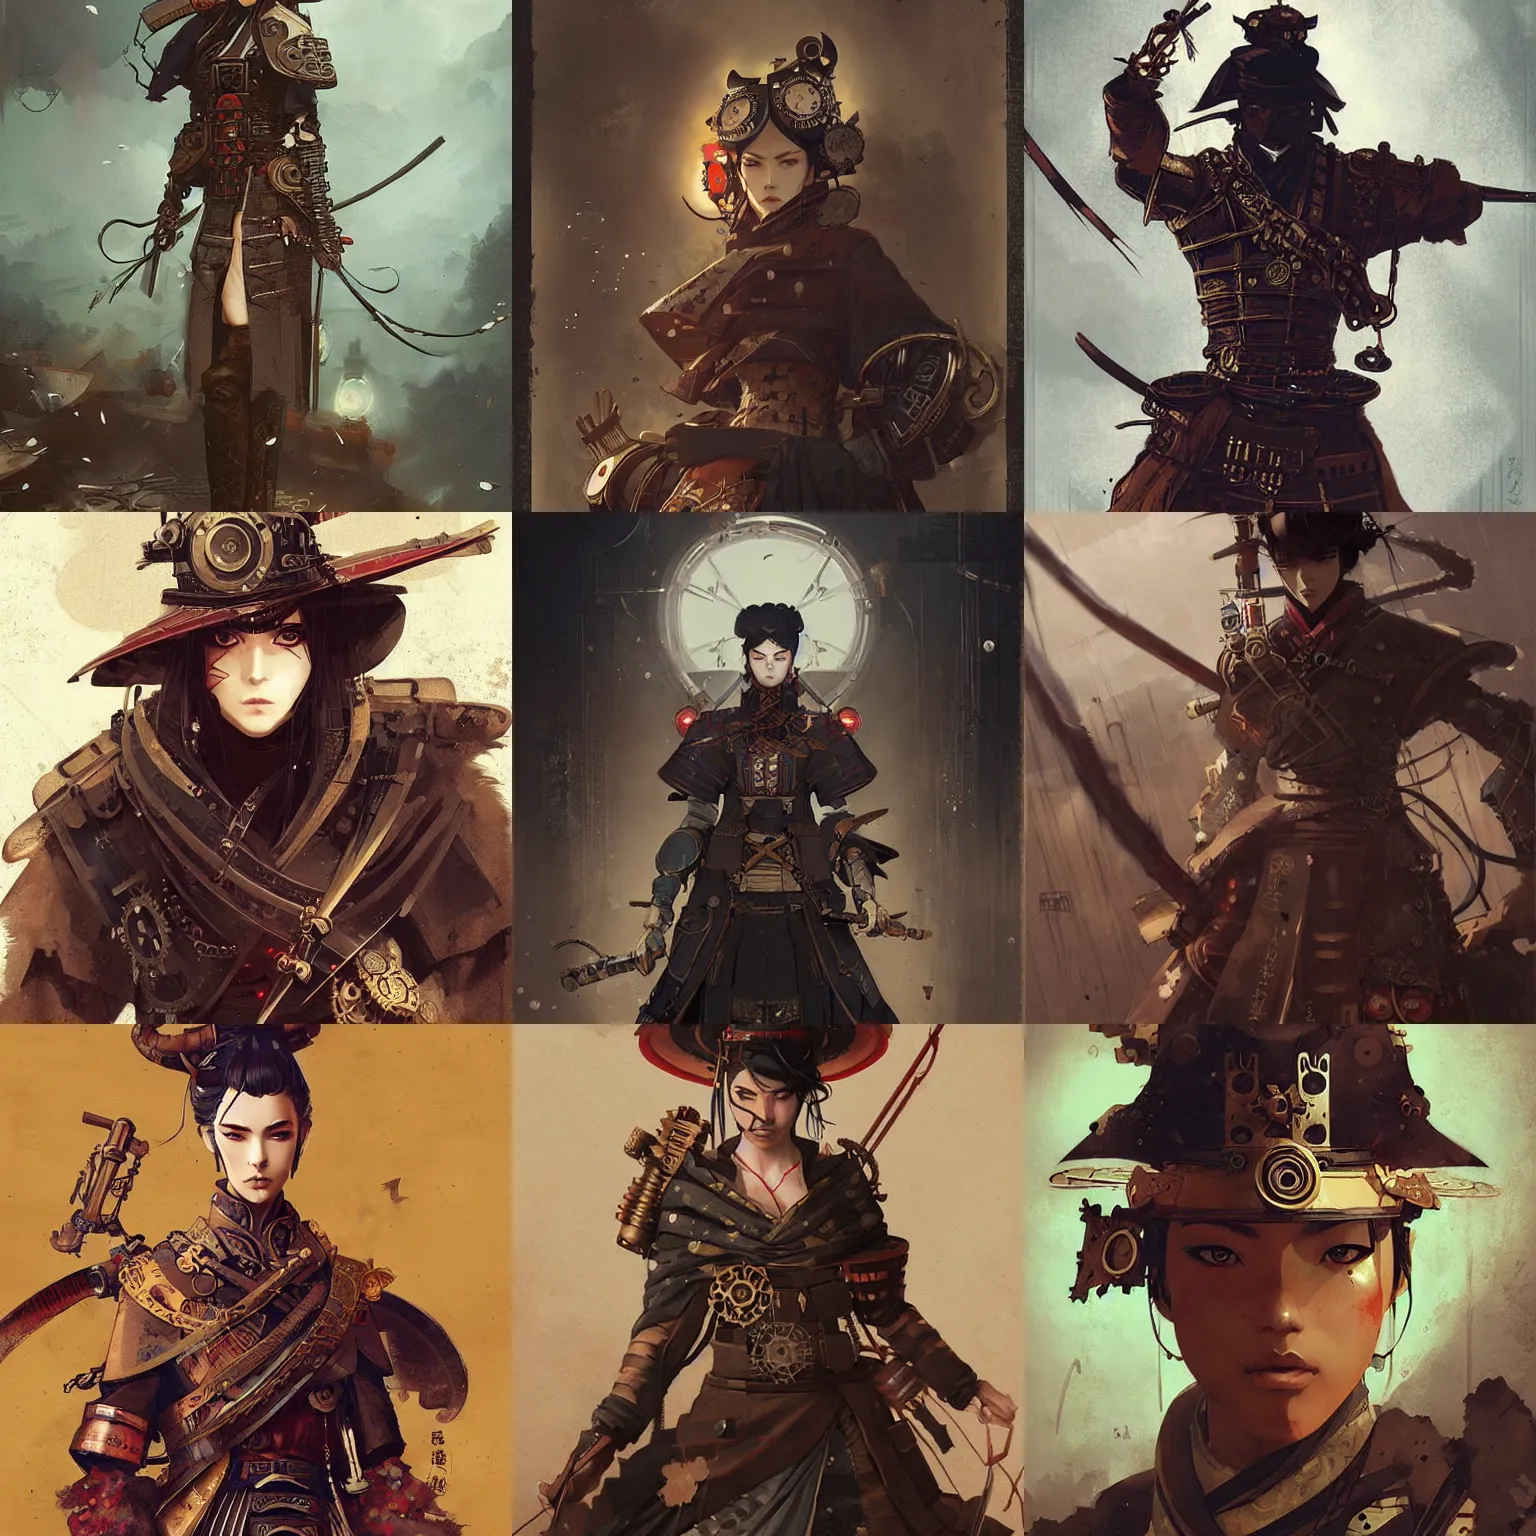 Prompt: steampunk samurai by greg rutkowski, artgerm, takato yomamoto, rule of thirds, fierce look, beautiful